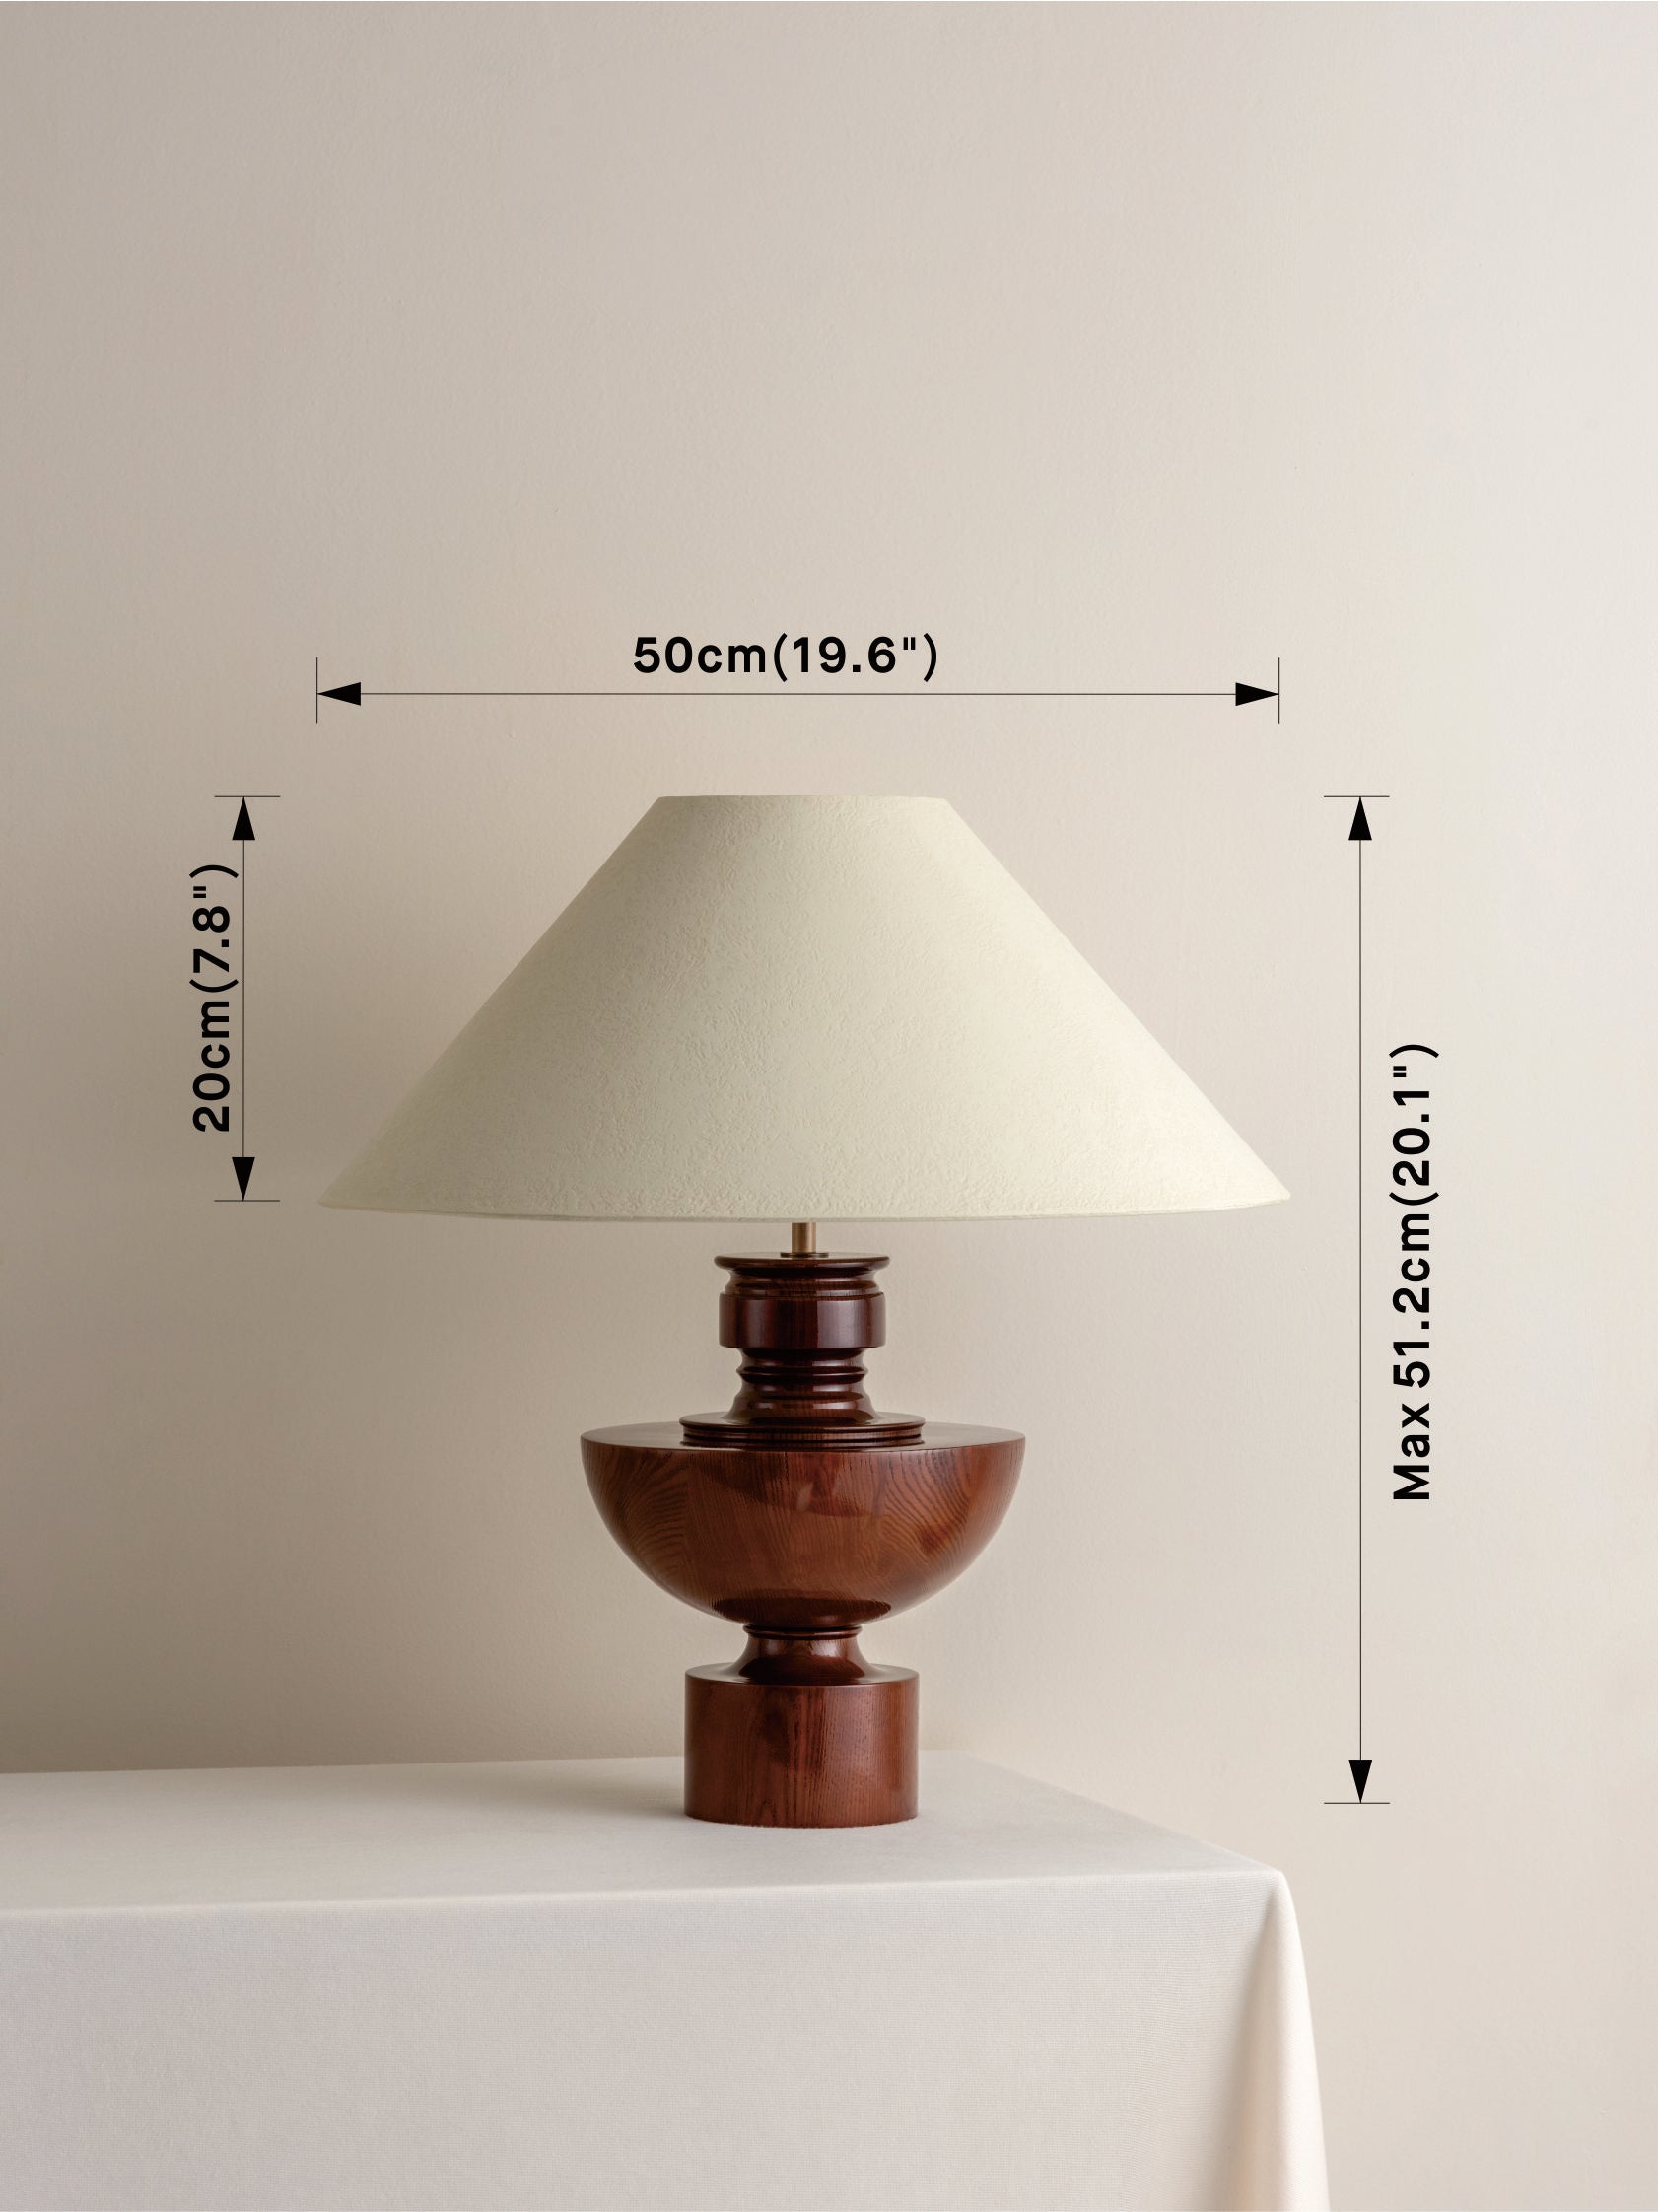 Editions spun wood lamp with + plaster shade | Table Lamp | Lights & Lamps | UK | Modern Affordable Designer Lighting